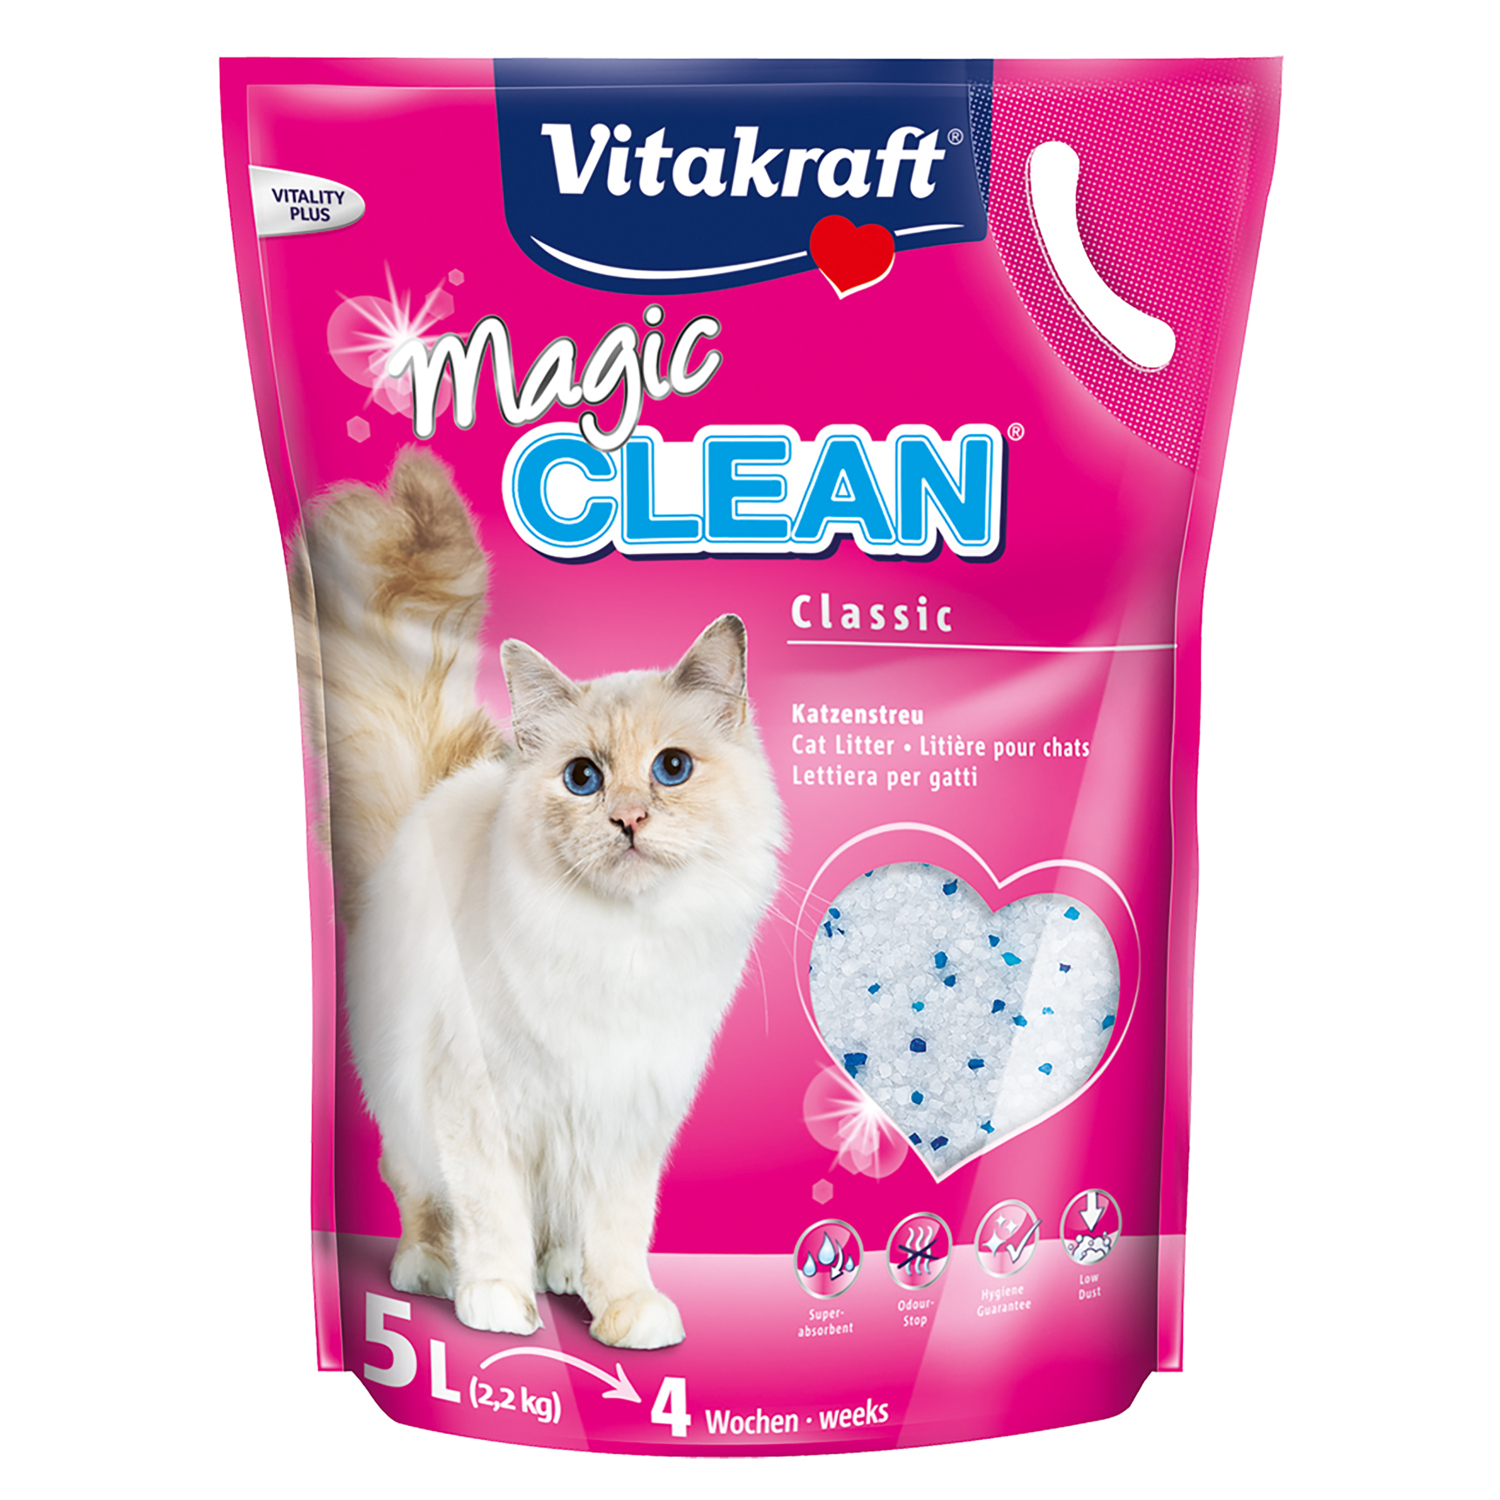 Vitakraft Magic Clean Cat Litter 5L Image